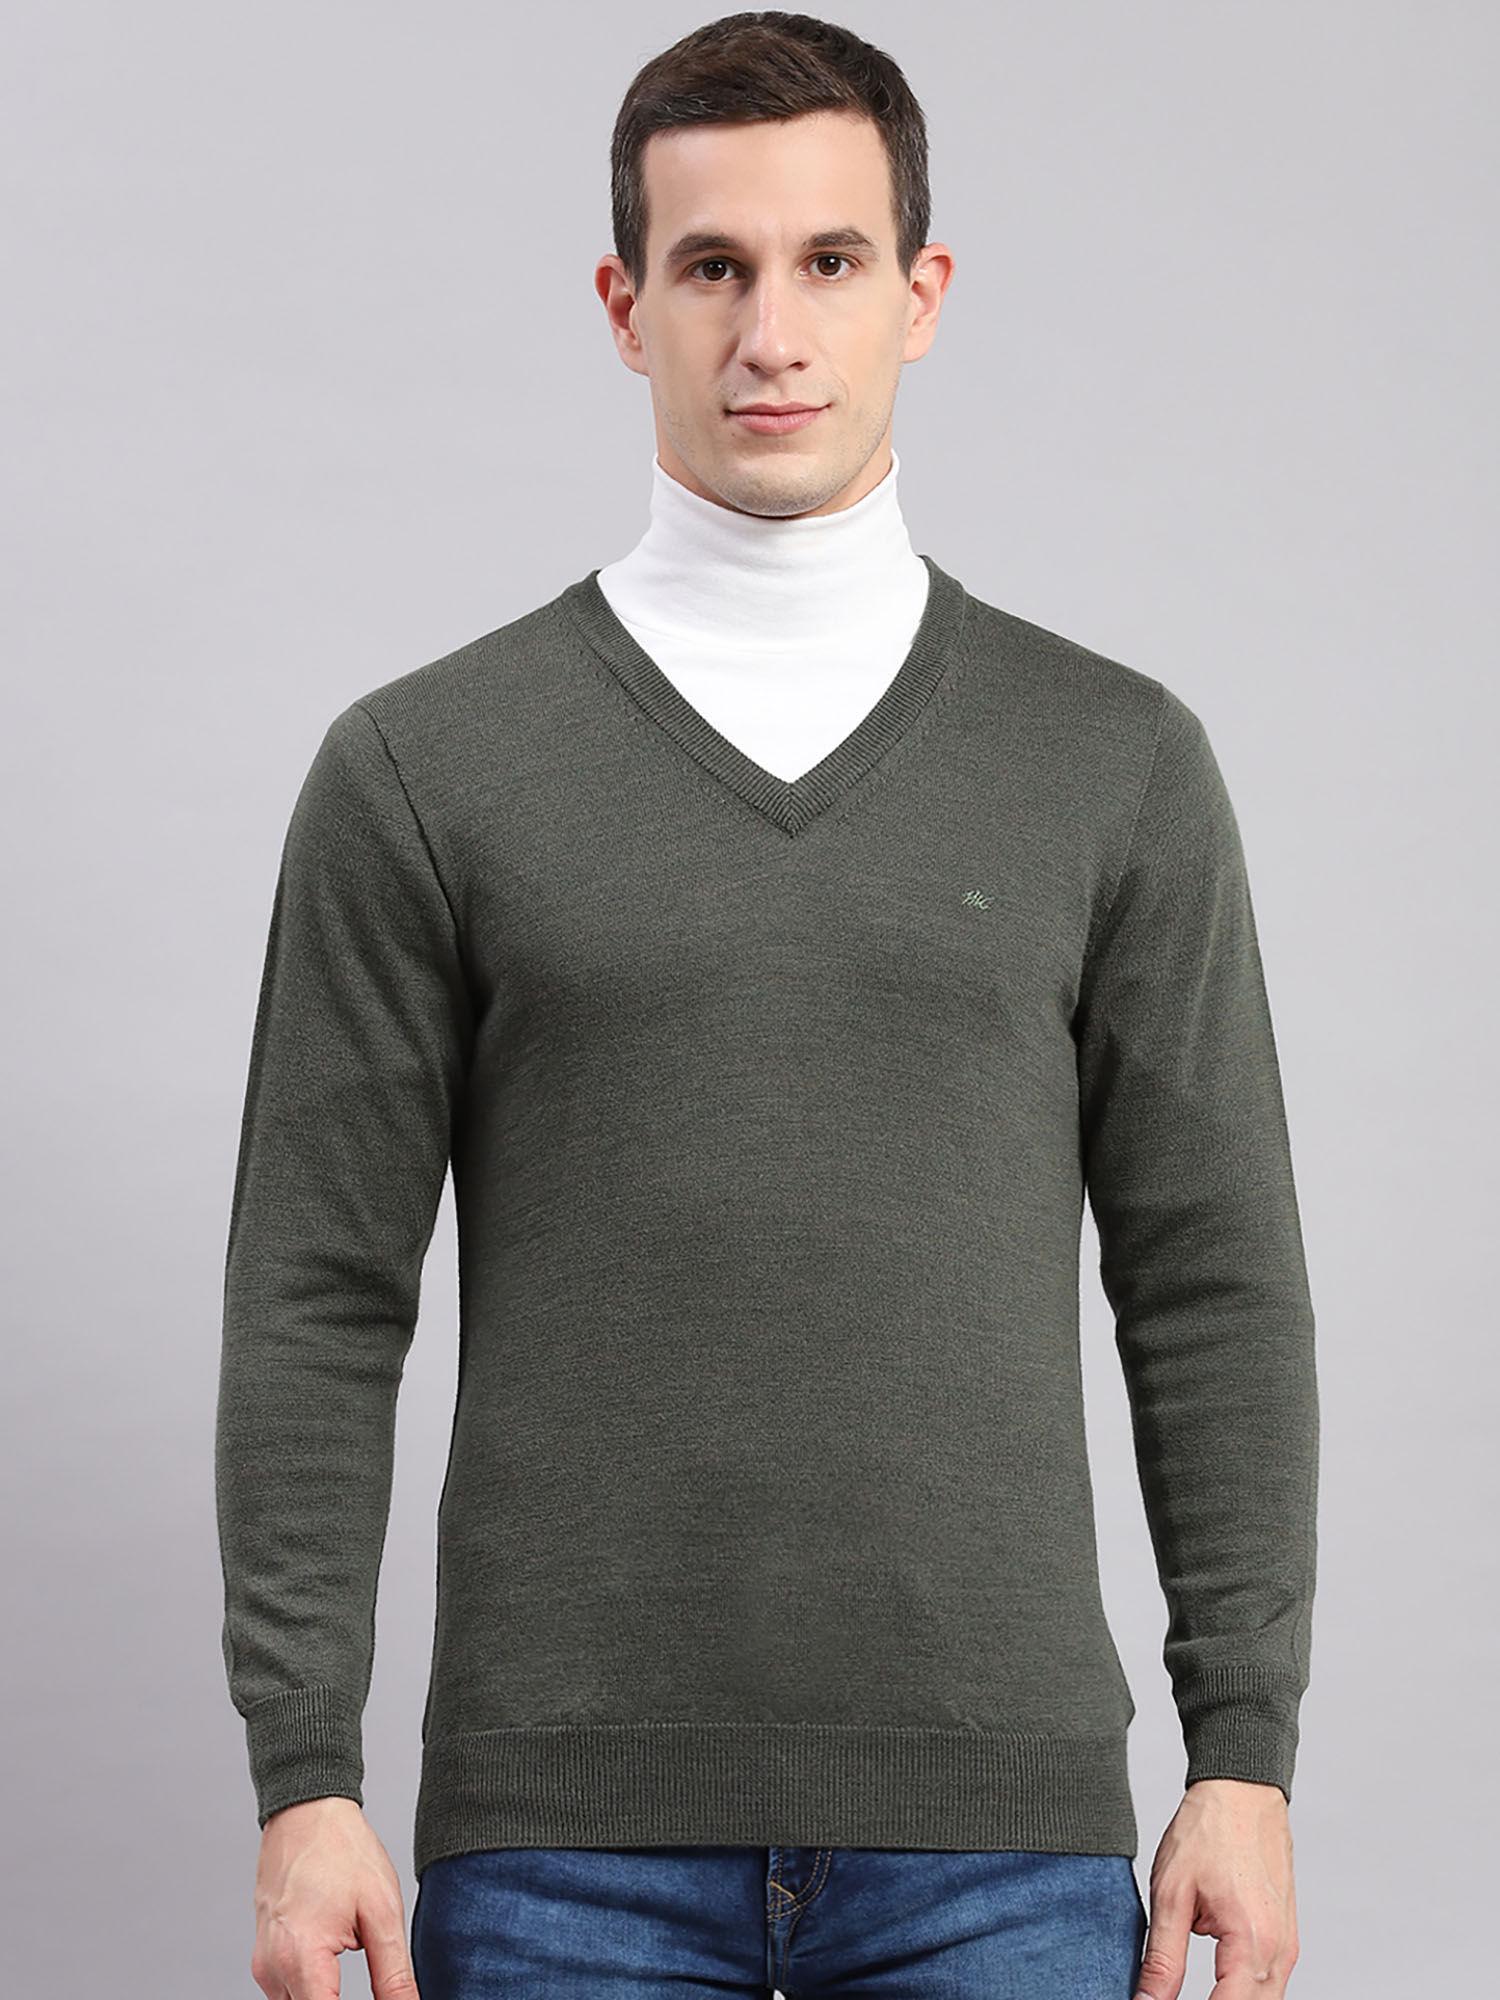 olive-mix-solid-v-neck-sweater